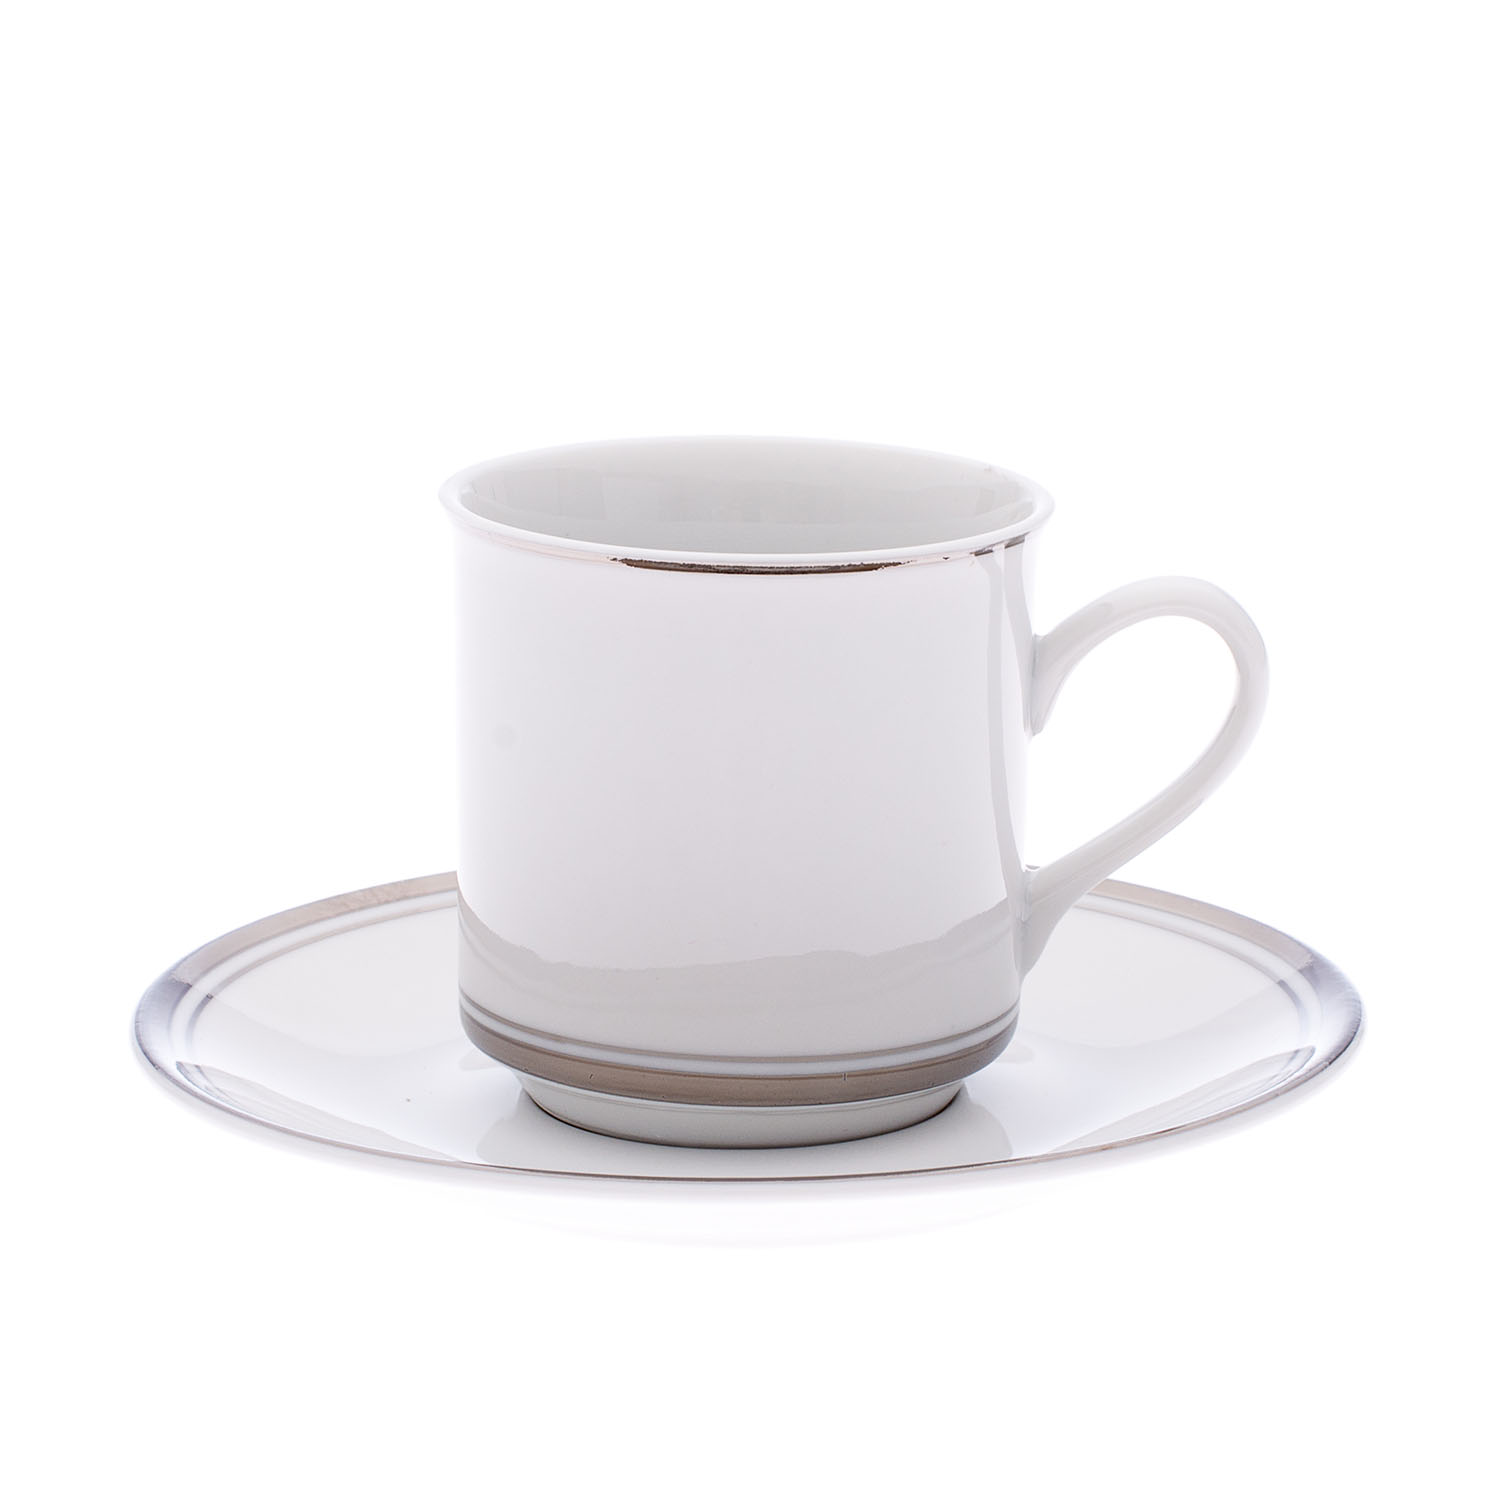 Kávový šálek, 0,15 l, karlovarský porcelán Leander, Sabina, platina